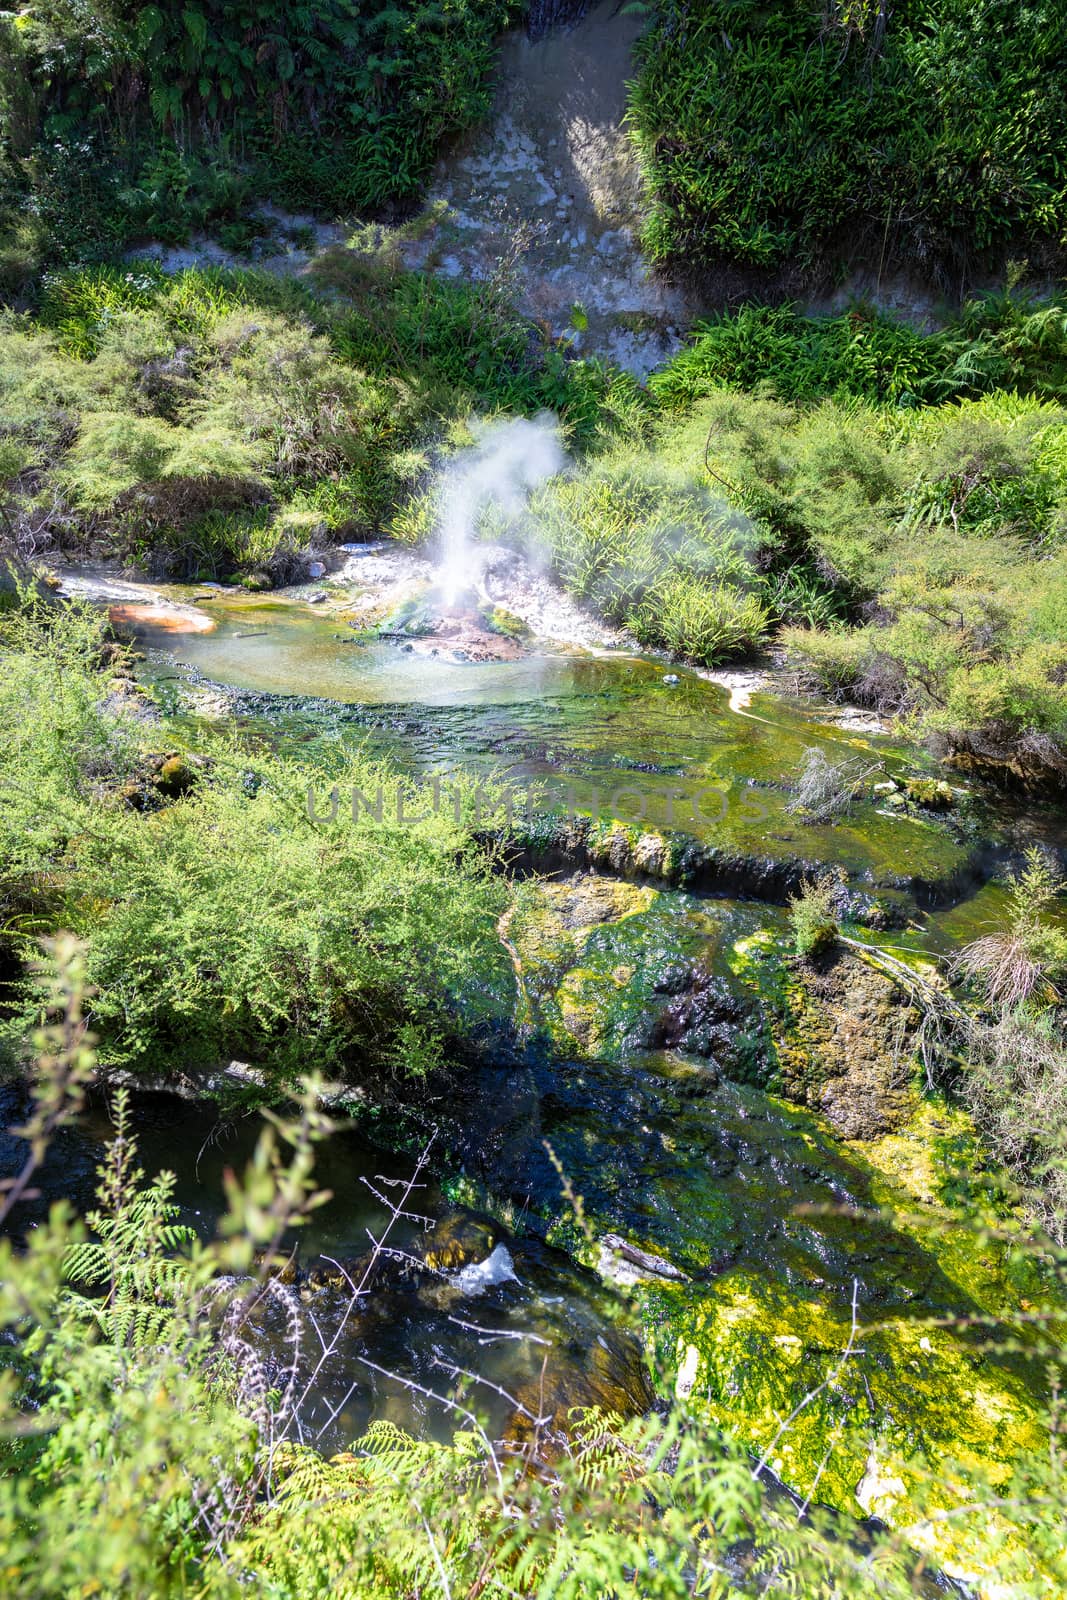 An image of a volcanic activities at waimangu new zealand